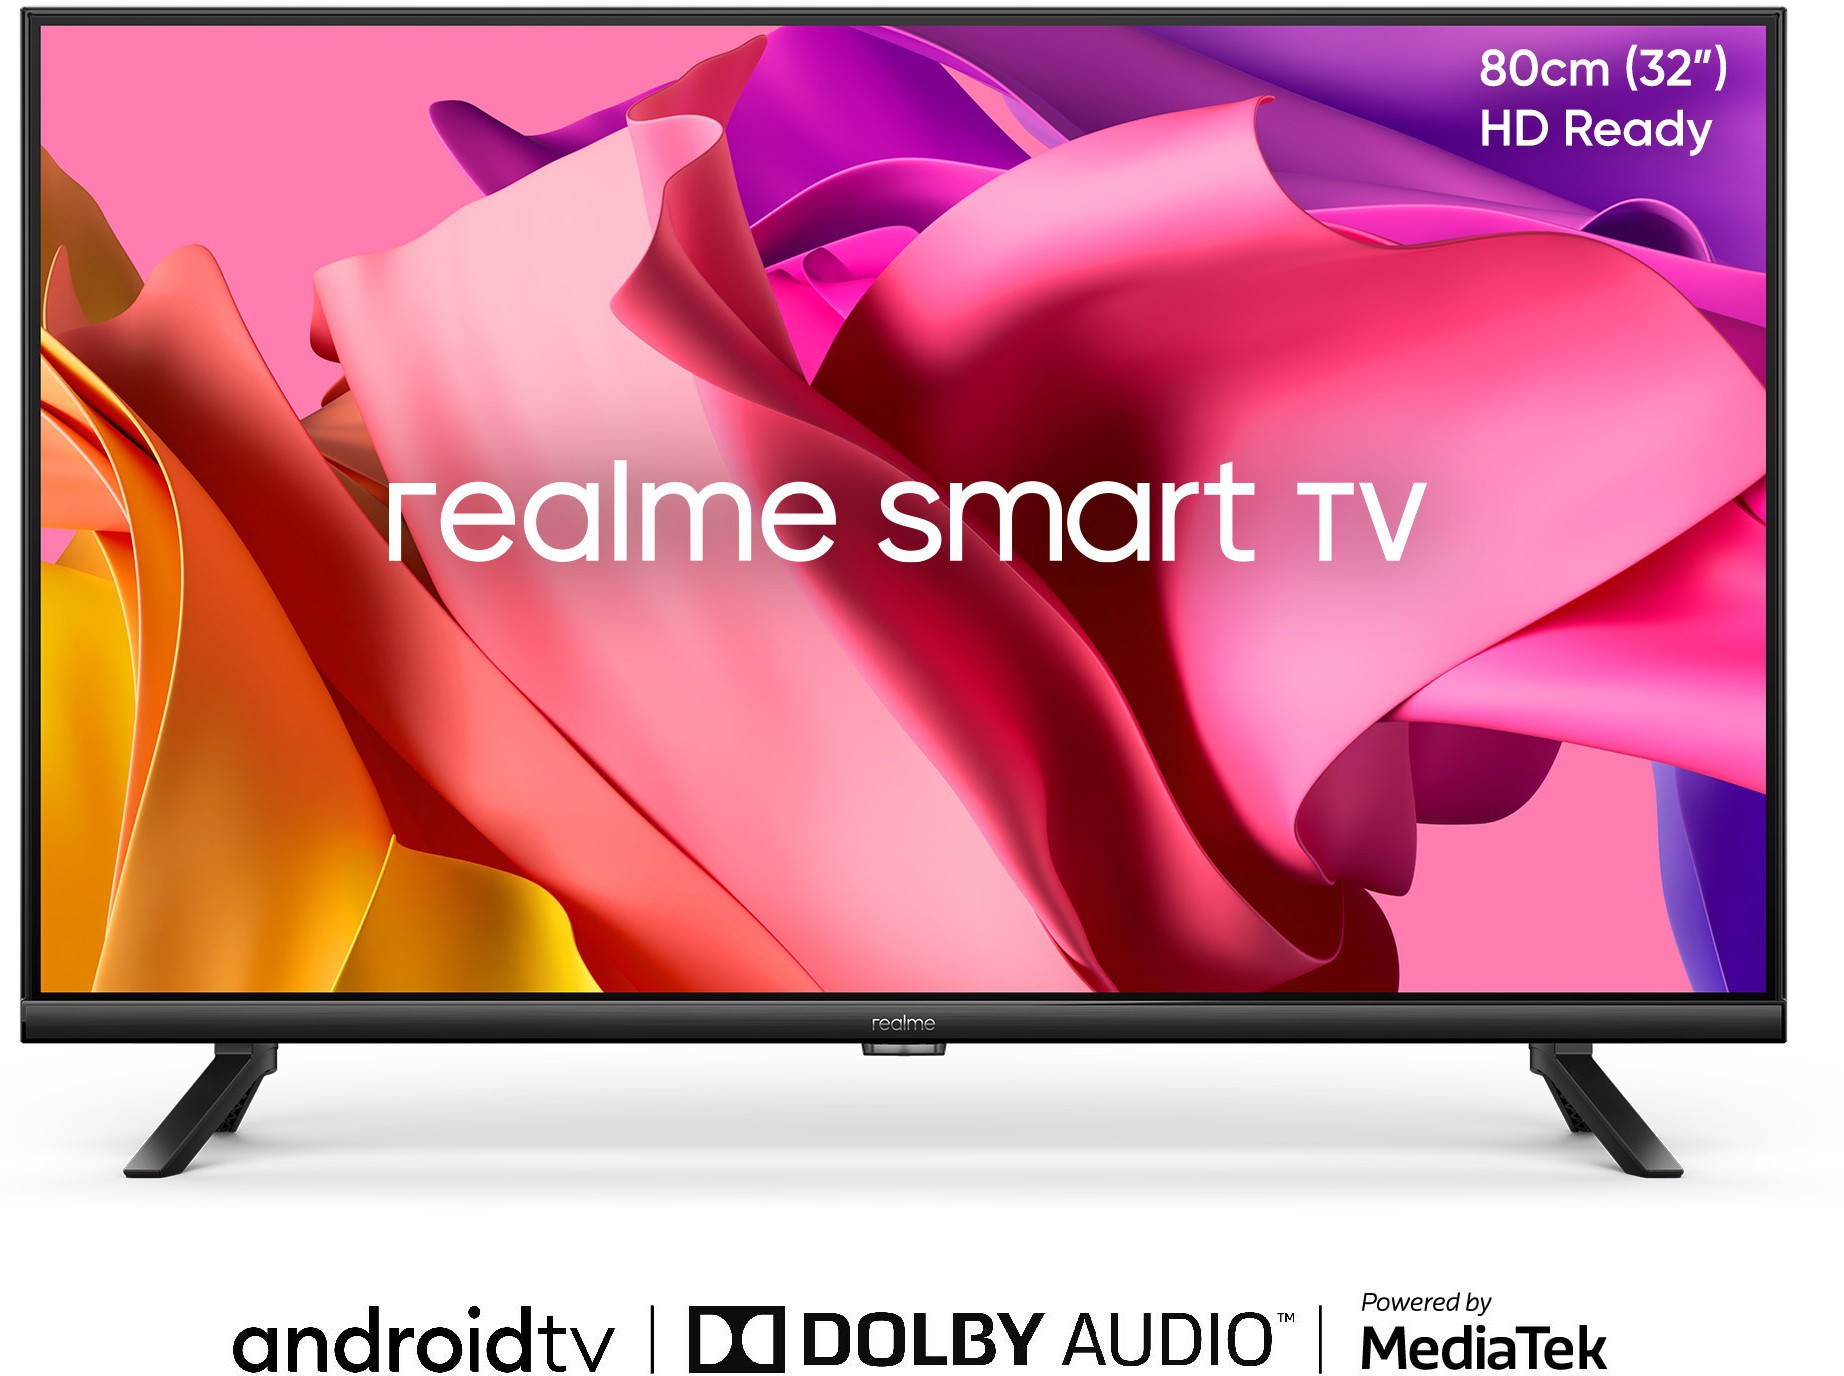 realme (32 inch) HD Ready LED ( TV 32 )